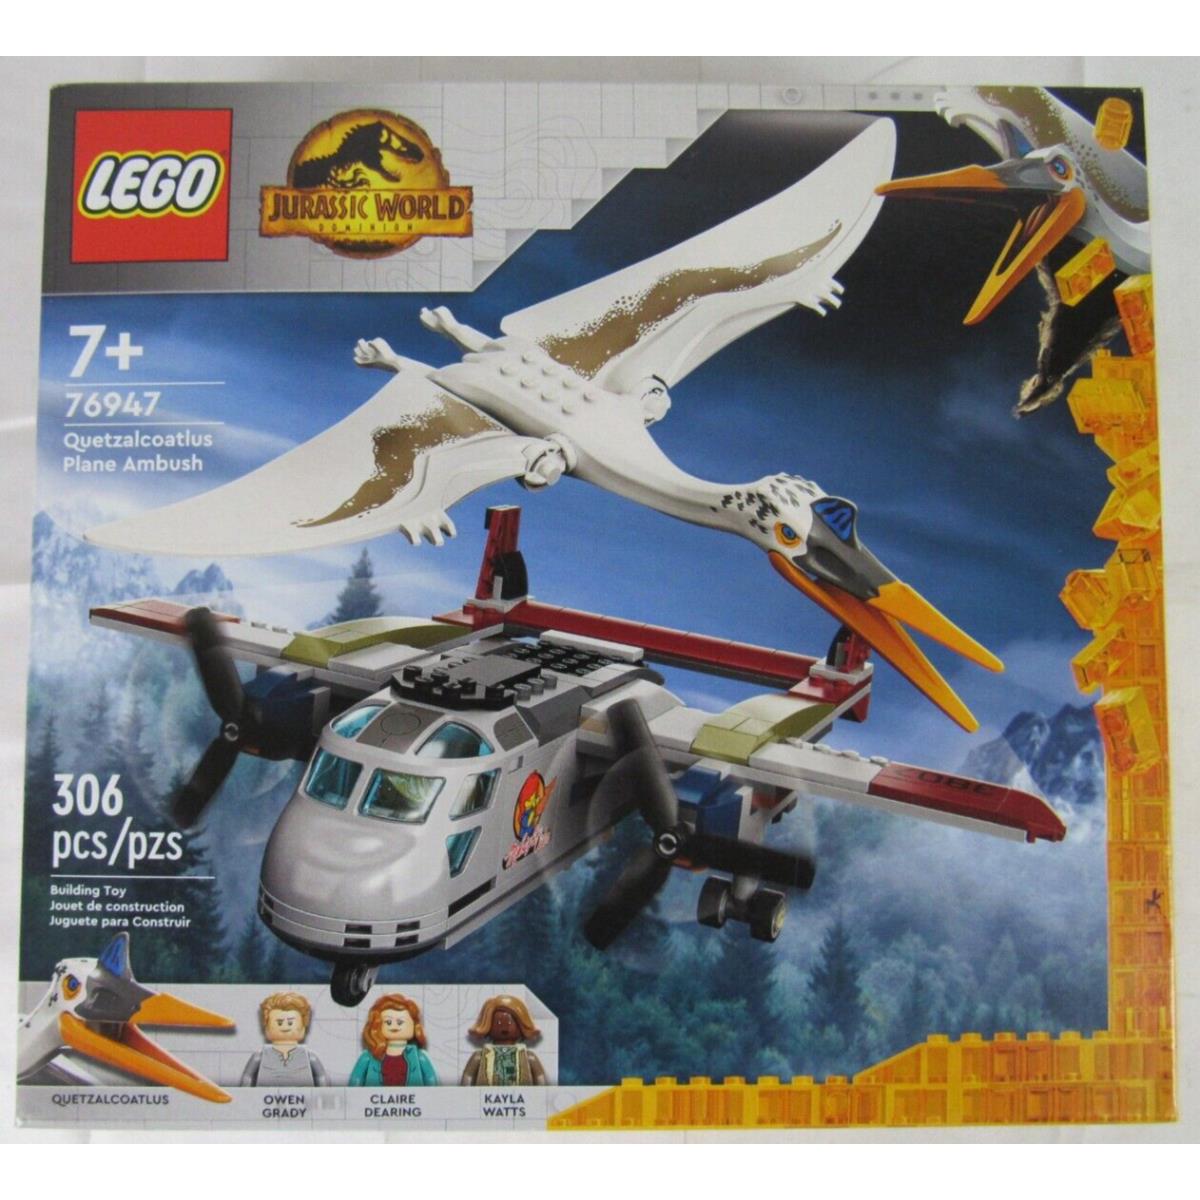 Lego Jurassic World 76947 Quetzalcoatlus Plane Ambush NV578